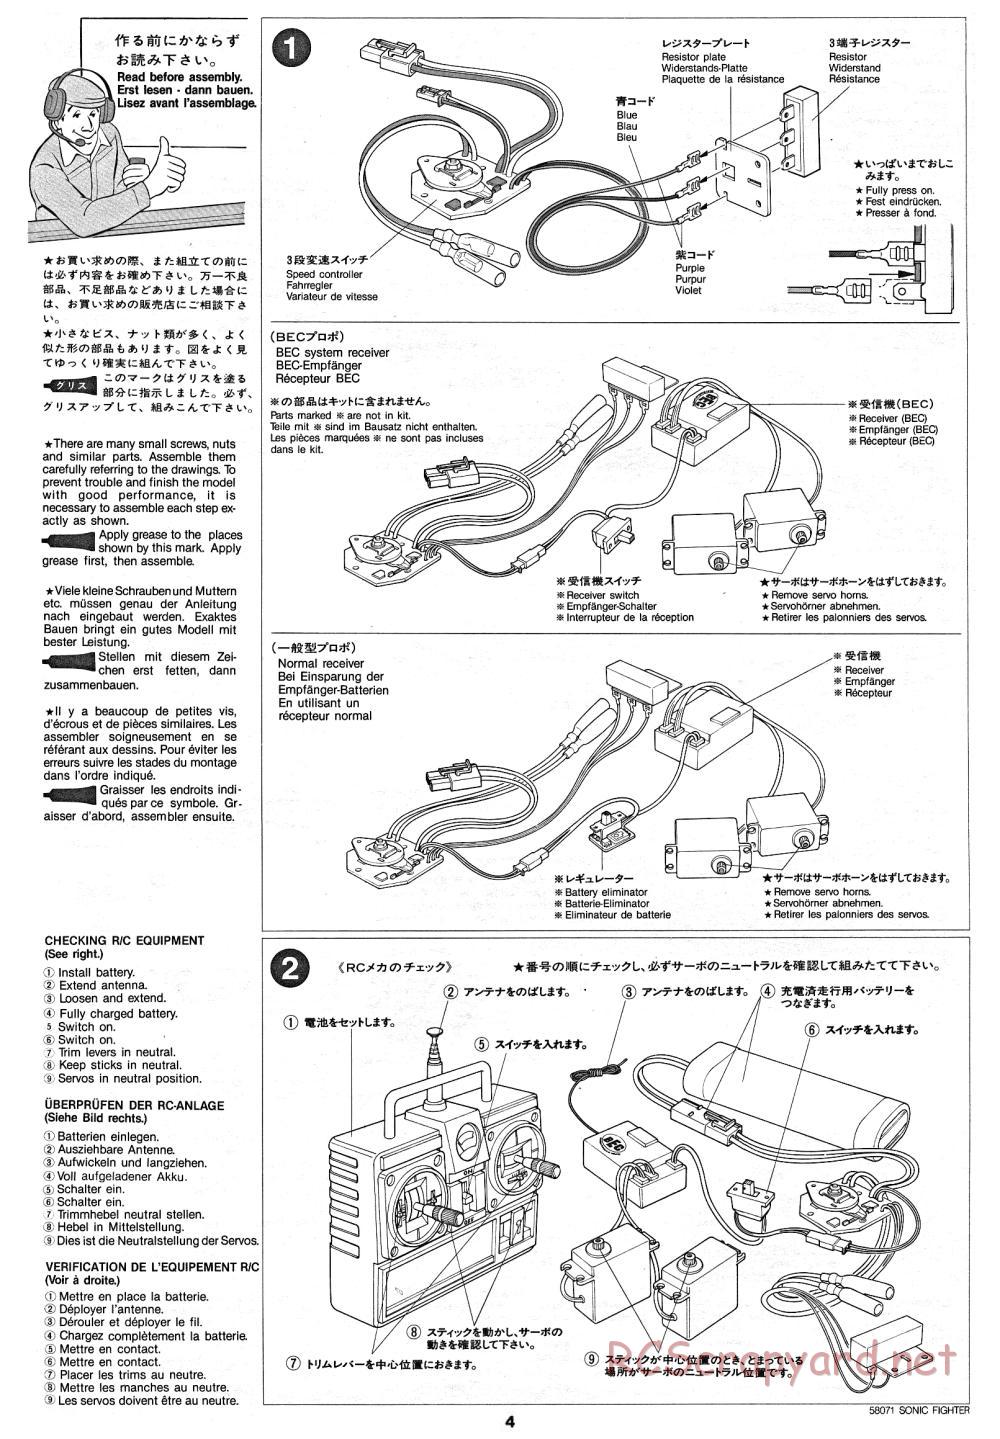 Tamiya - Sonic Fighter - 58071 - Manual - Page 4